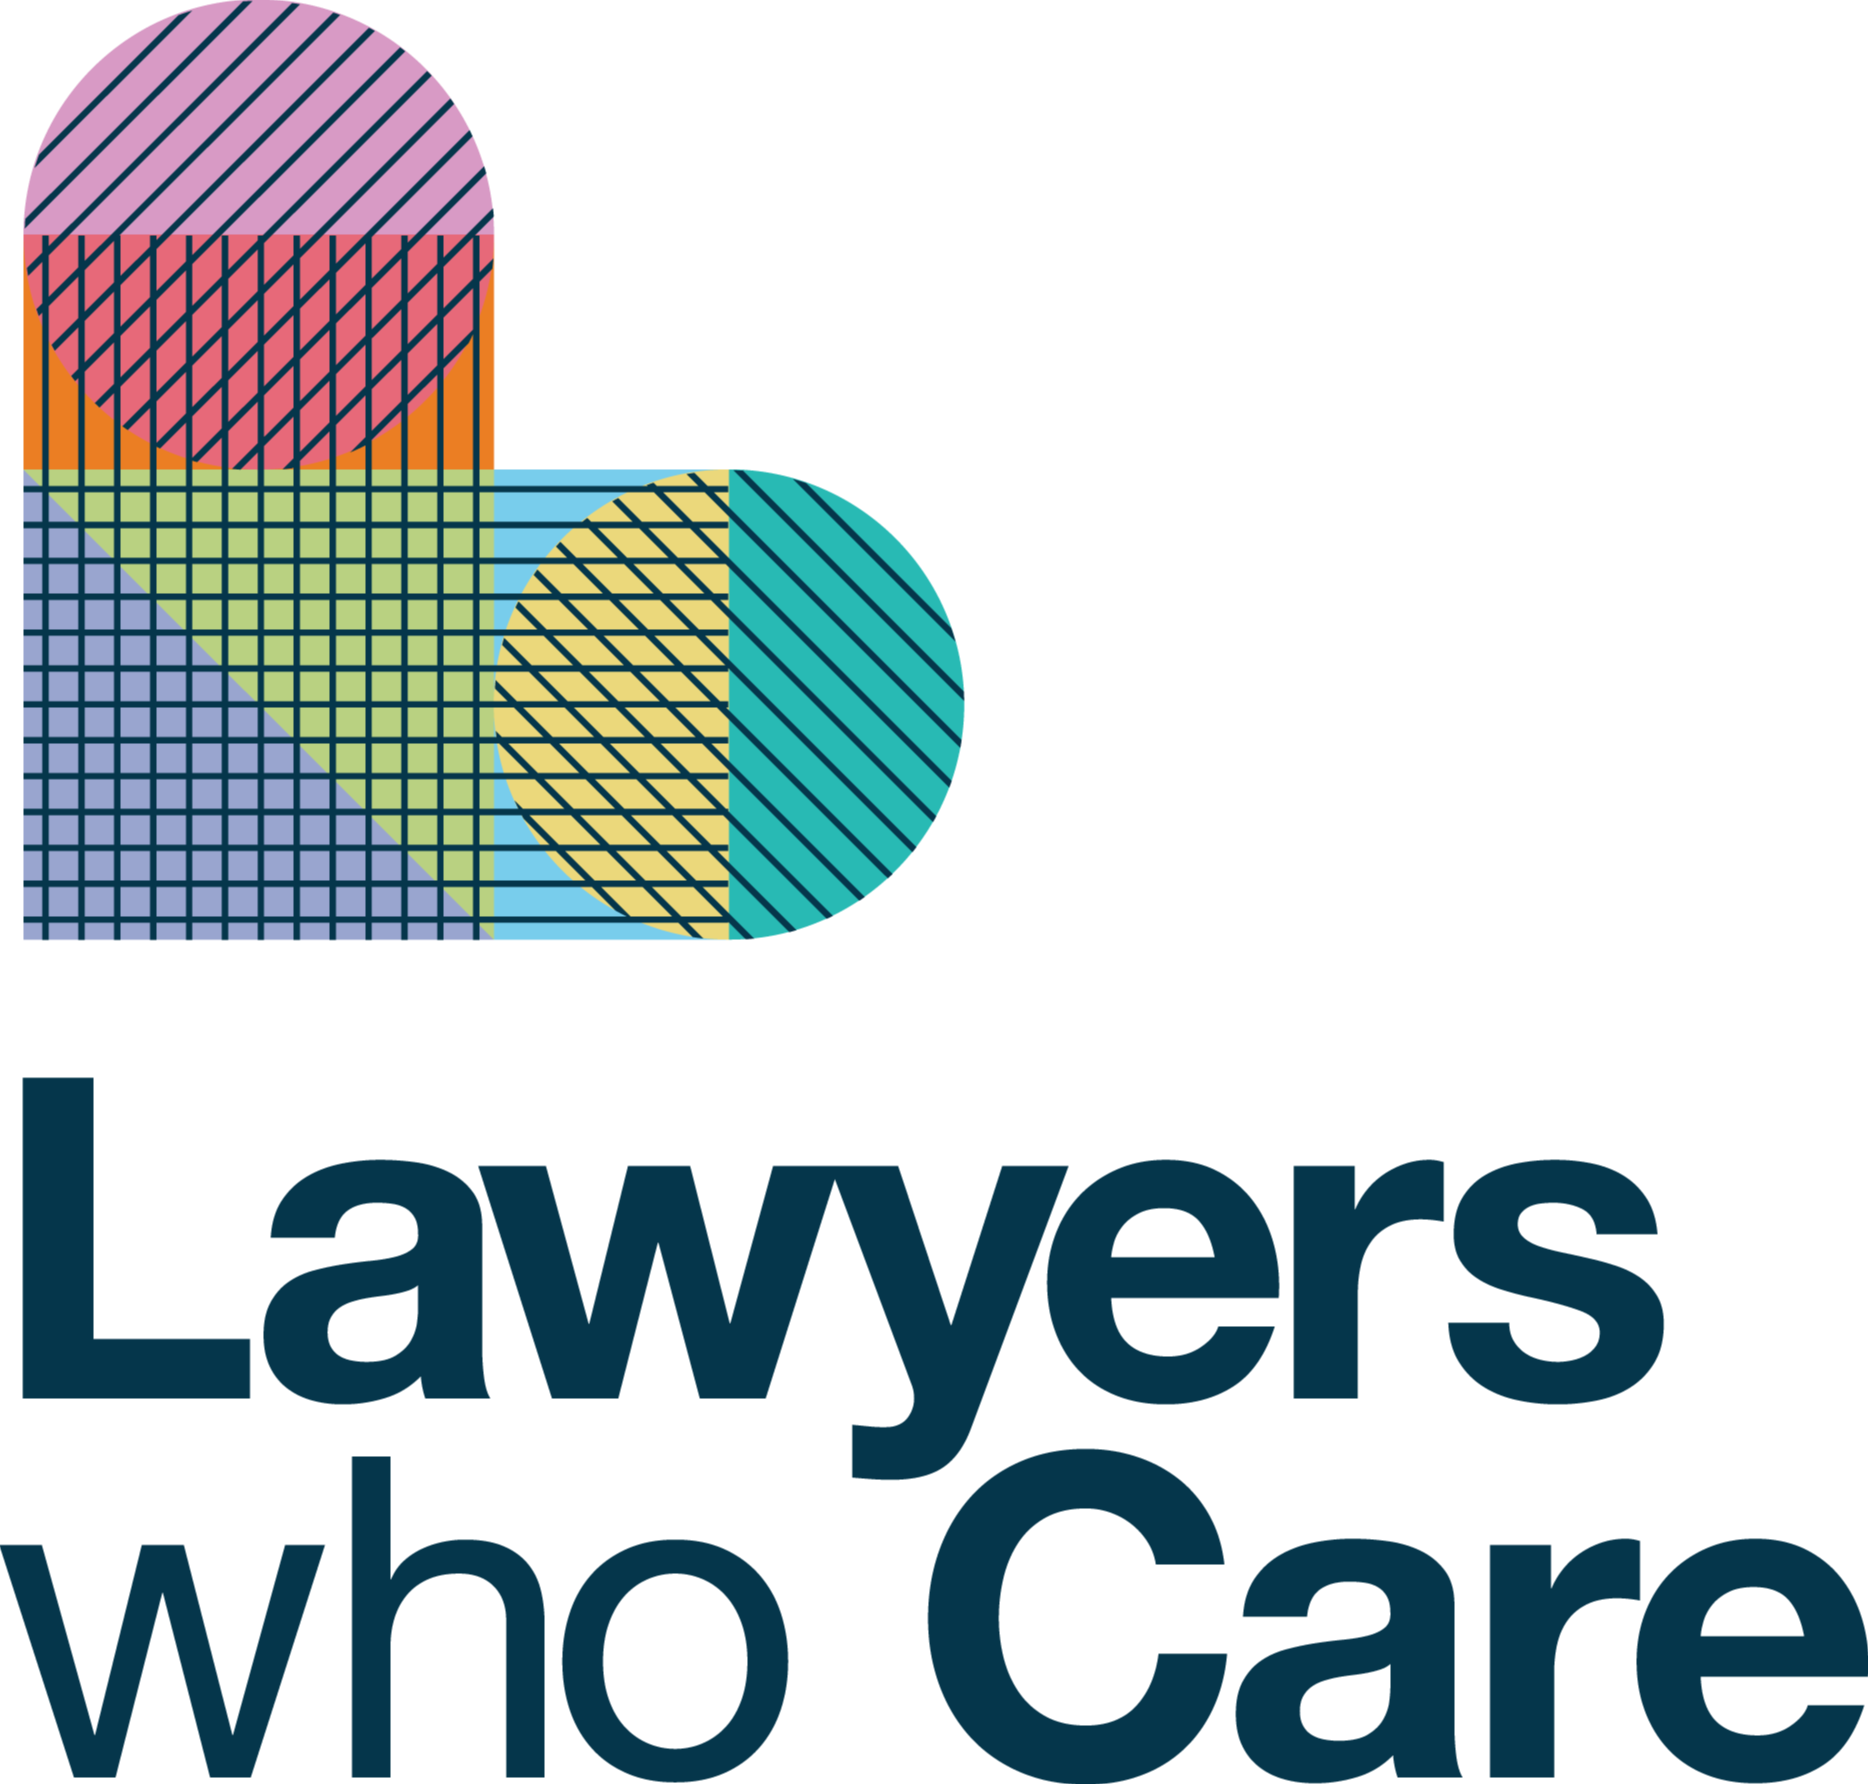 Lawyers Who Care logo